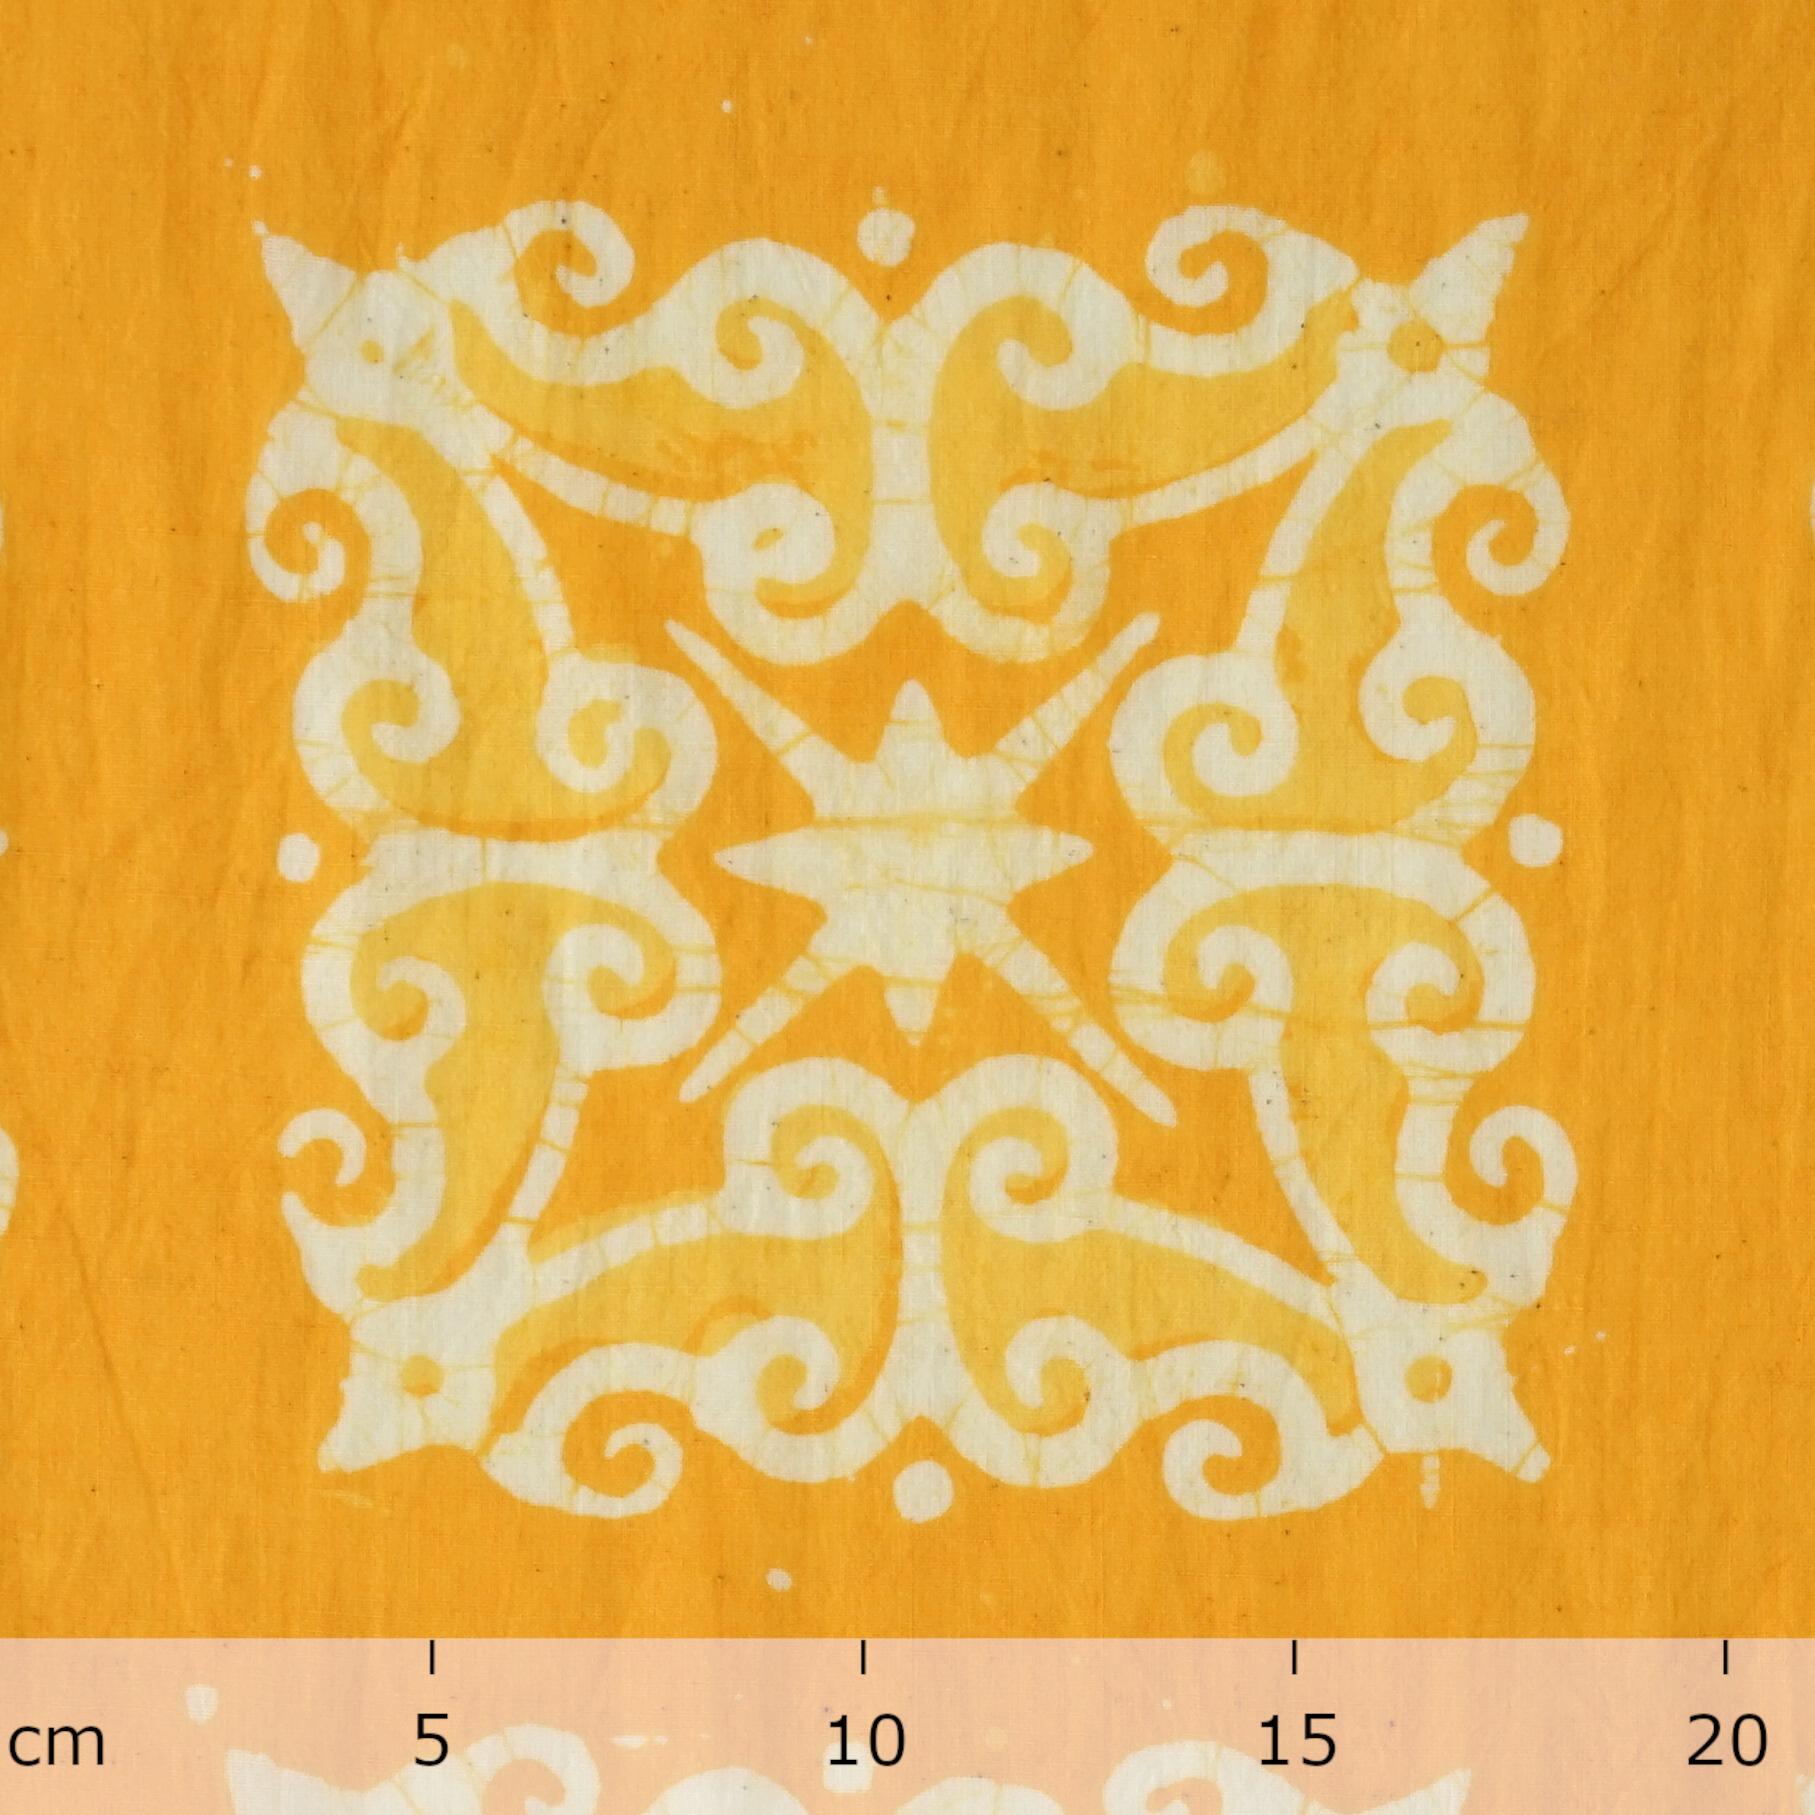 100% Block-Printed Batik Cotton Fabric From India - Sunkissed Design - Yellow Dye - Ruler